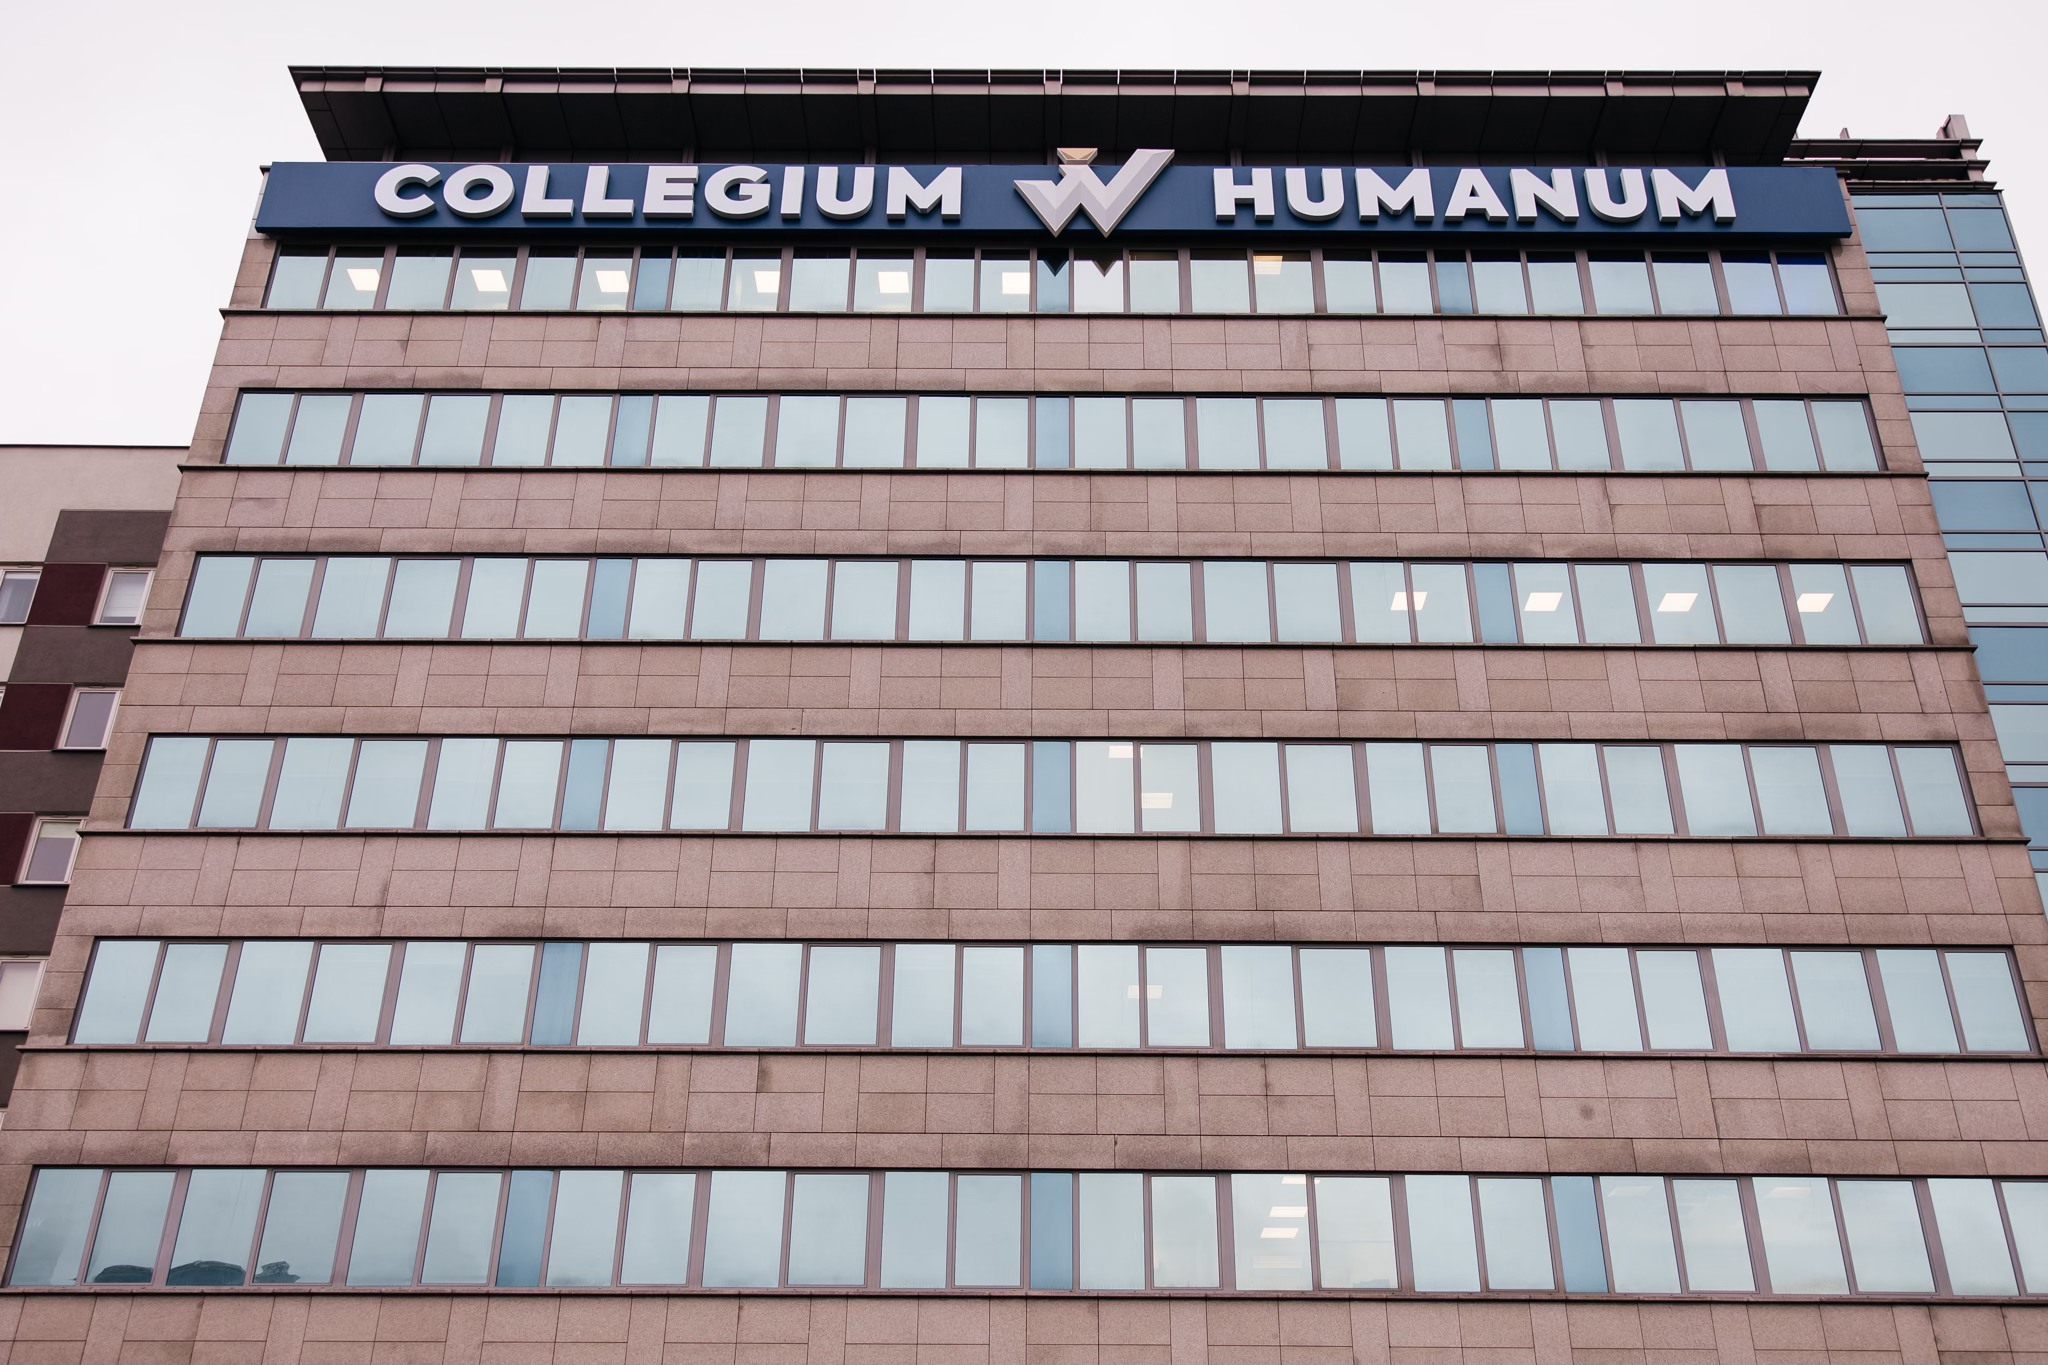 fasada budynku humanum